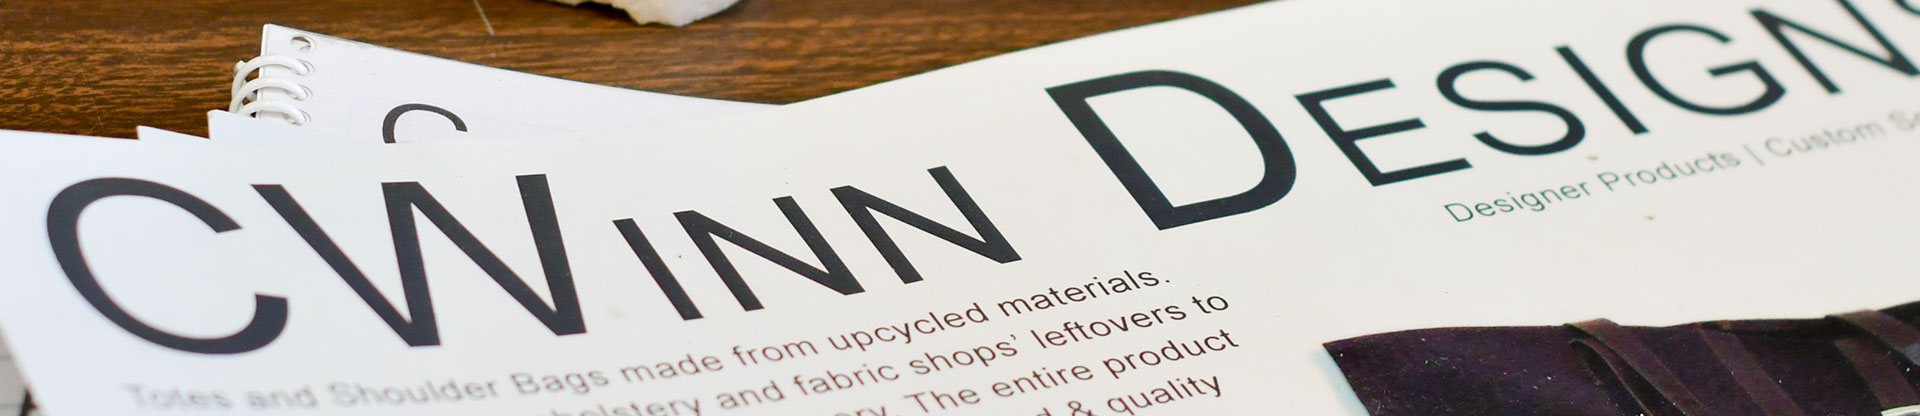 C.Winn Designs Inc. as a heading on the paper